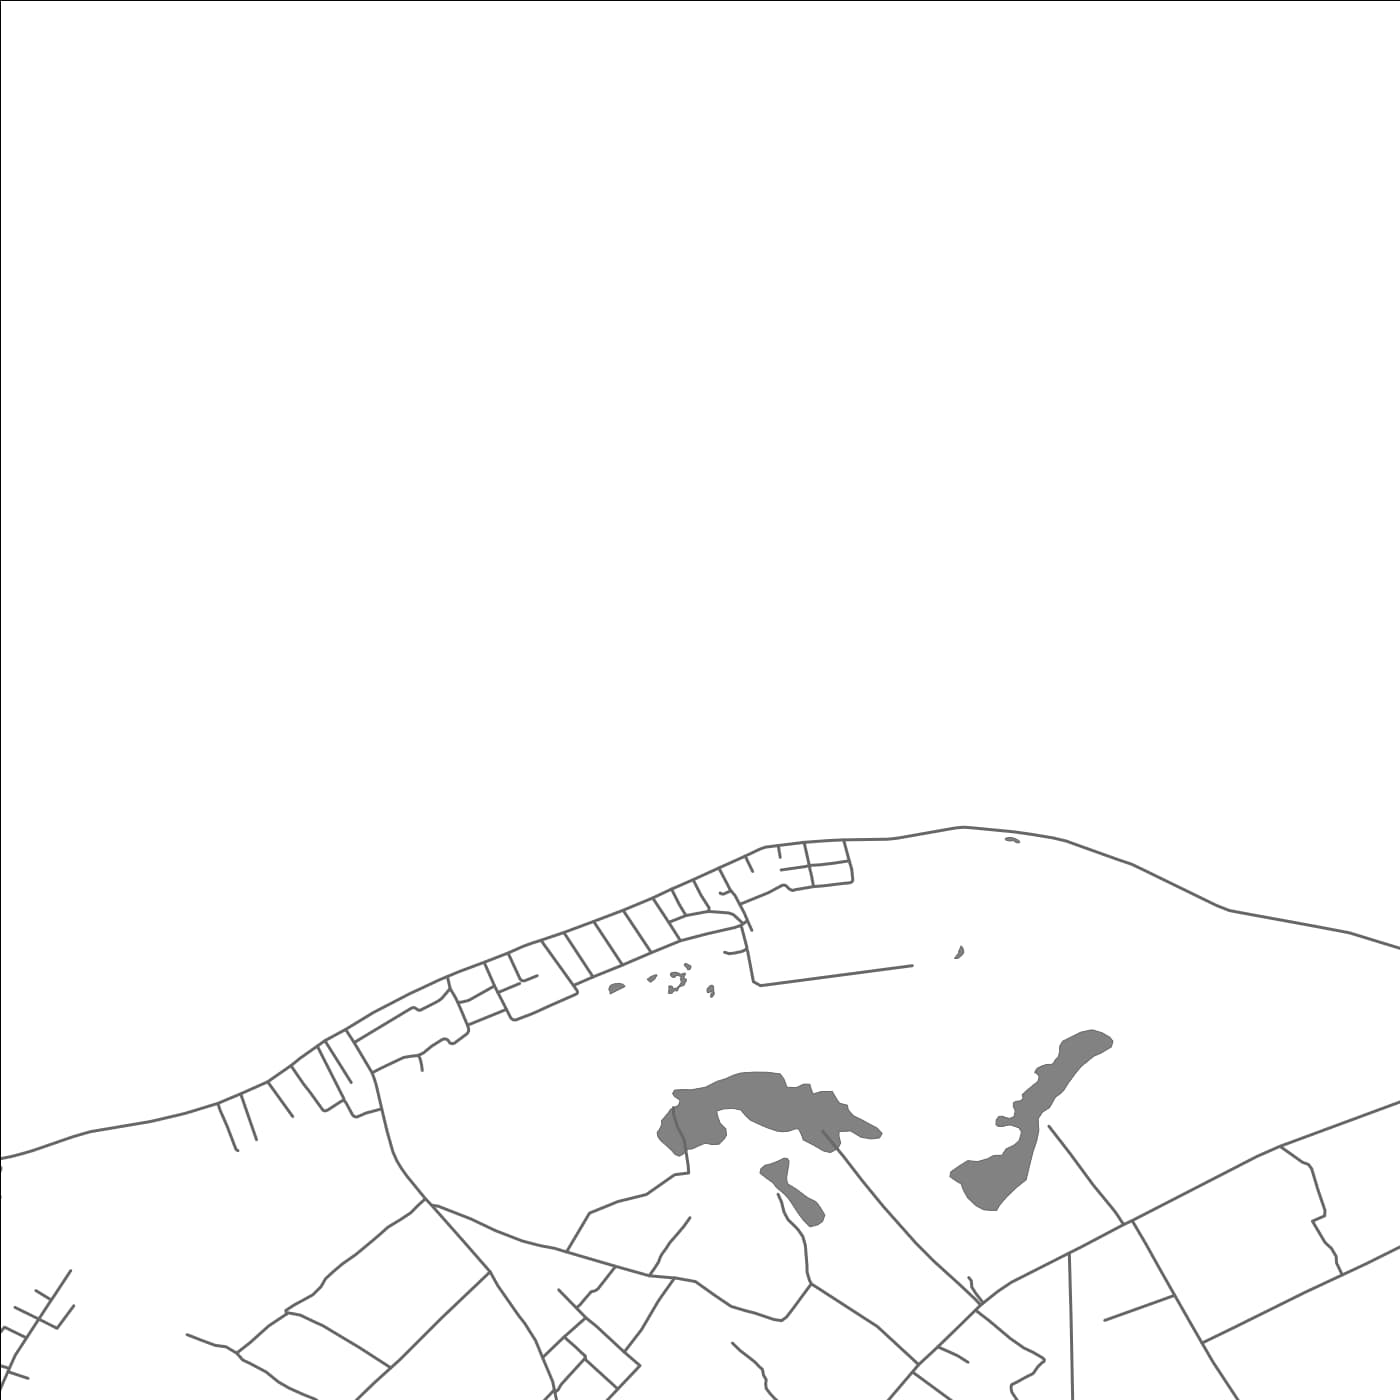 ROAD MAP OF MANUKA, TONGA BY MAPBAKES